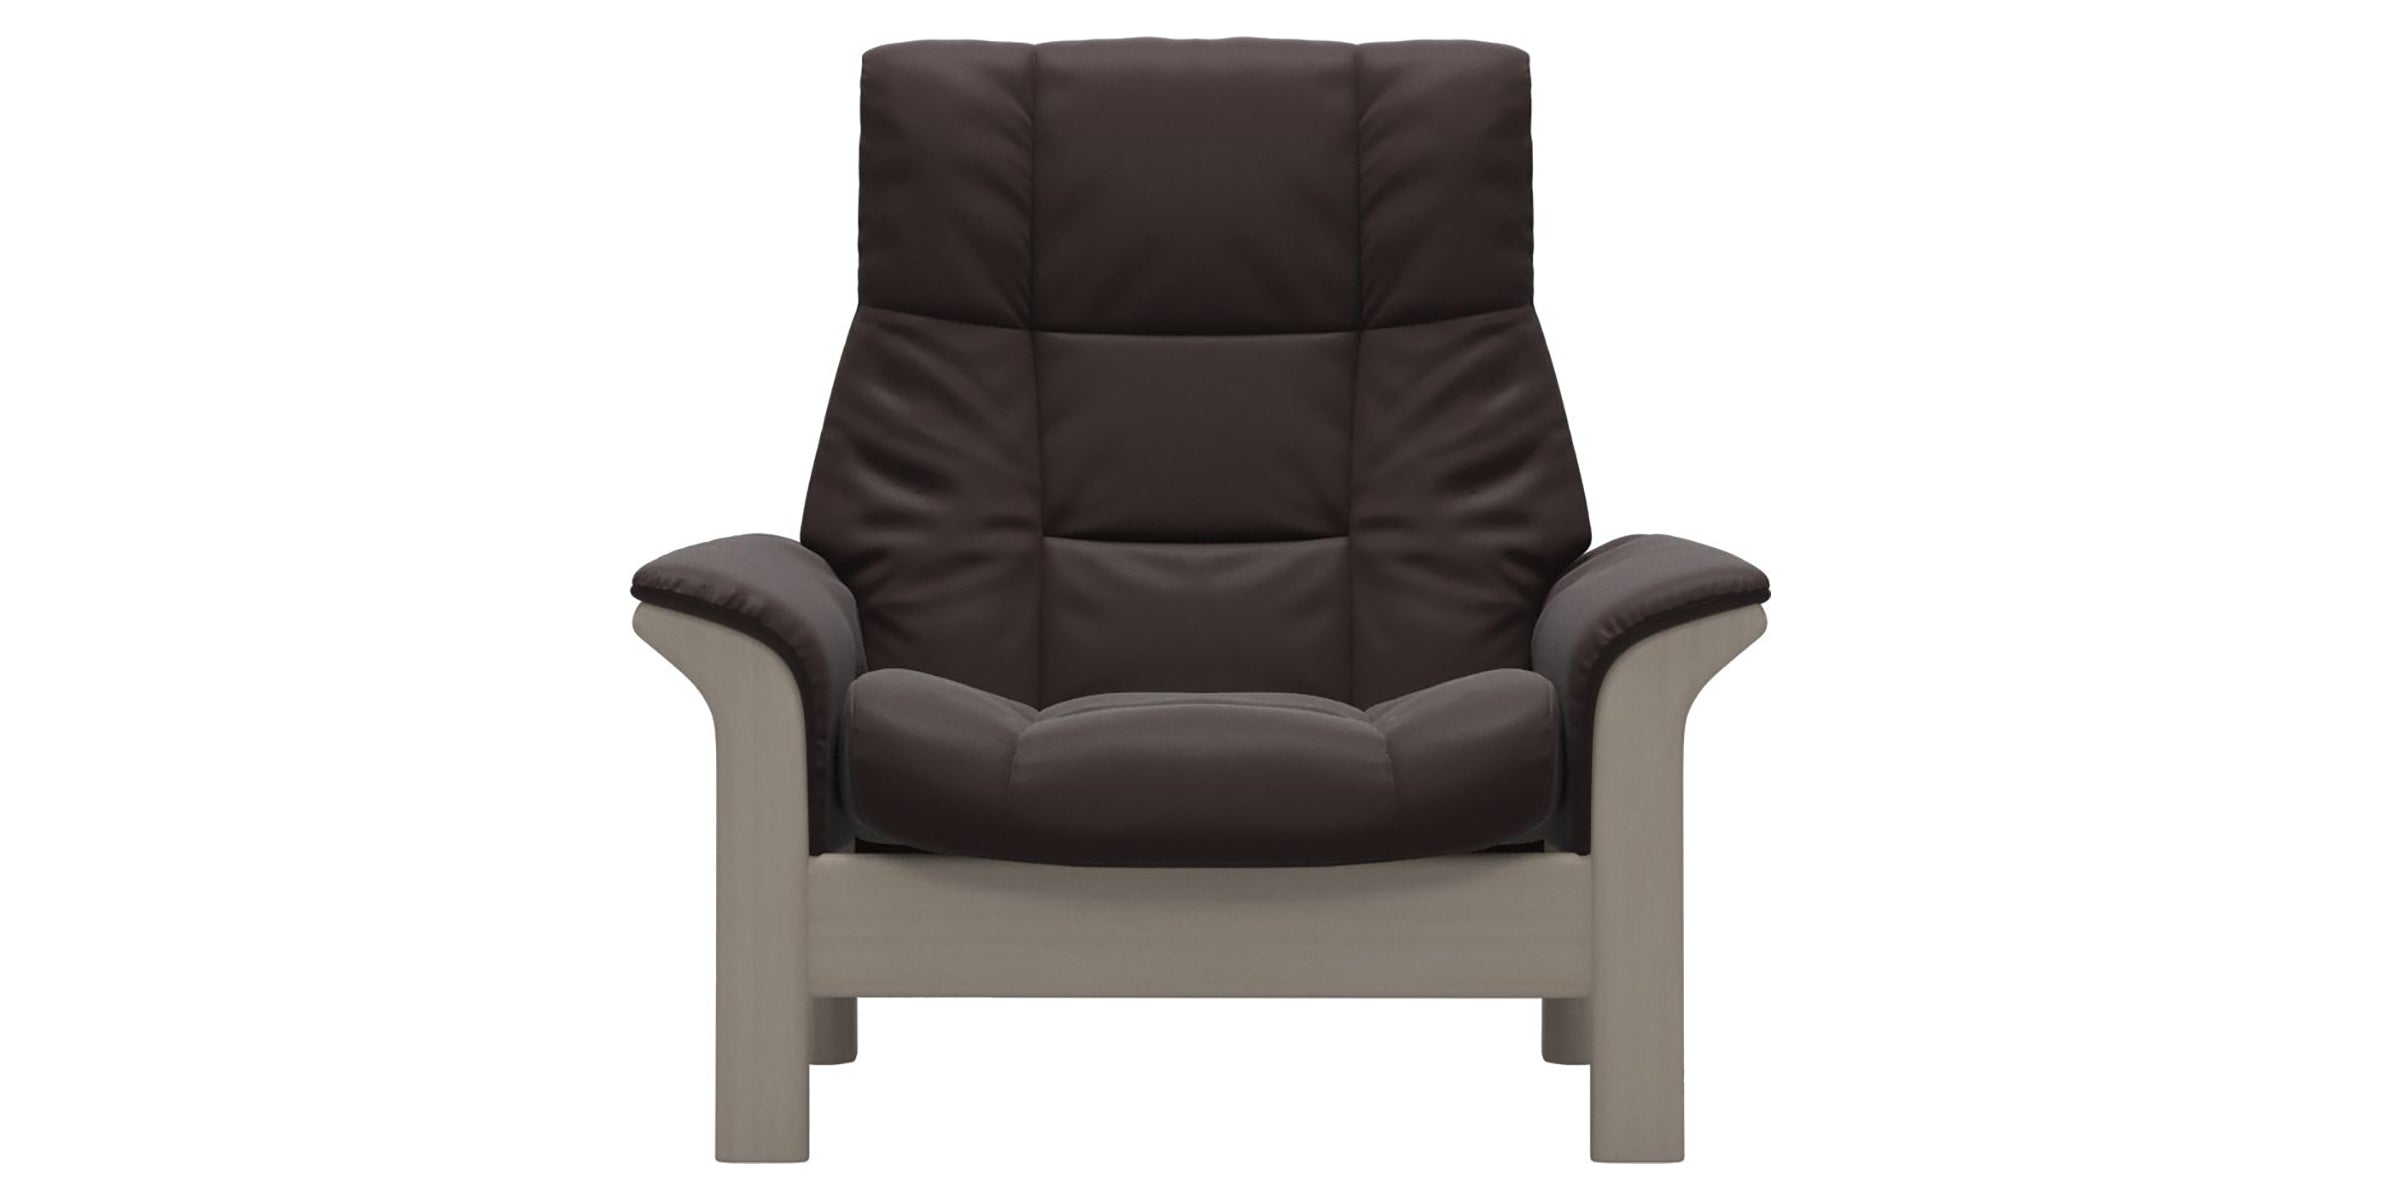 Paloma Leather Chocolate and Whitewash Base | Stressless Buckingham High Back Chair | Valley Ridge Furniture